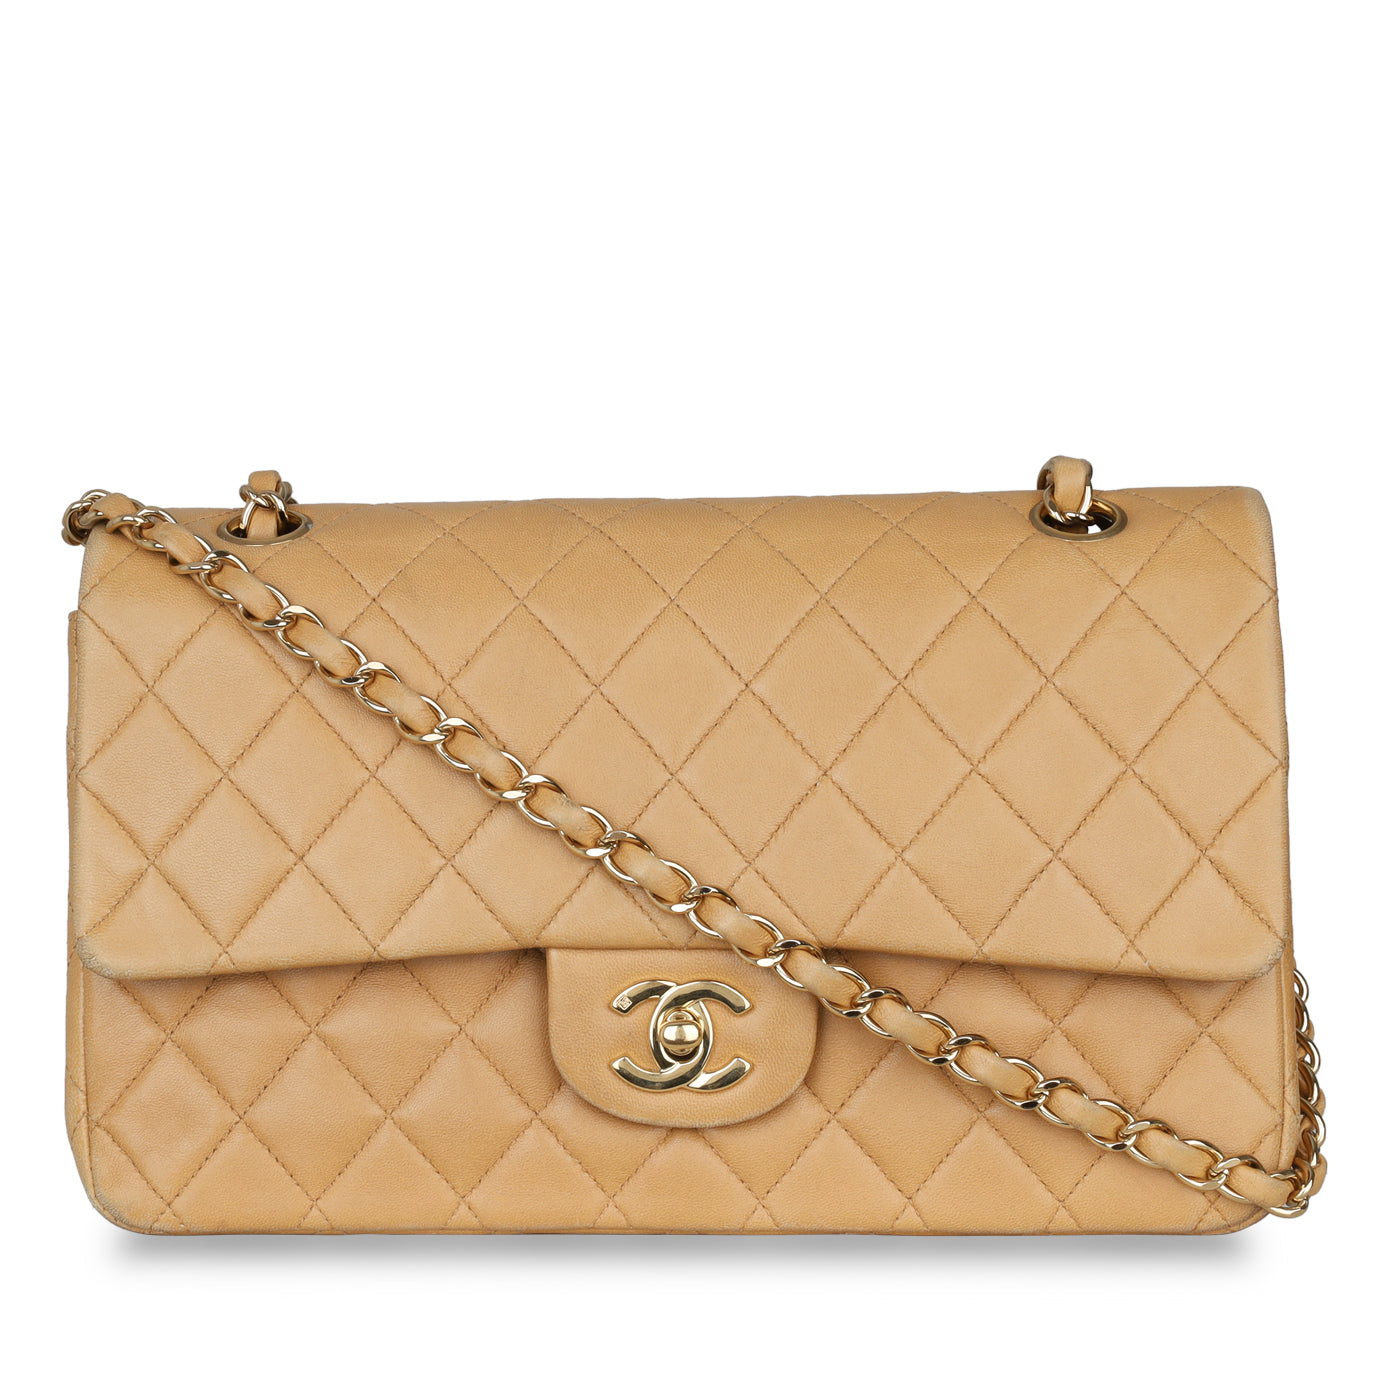 Chanel - Classic Flap Bag - Medium - Beige Lambskin - GHW - Pre-Loved